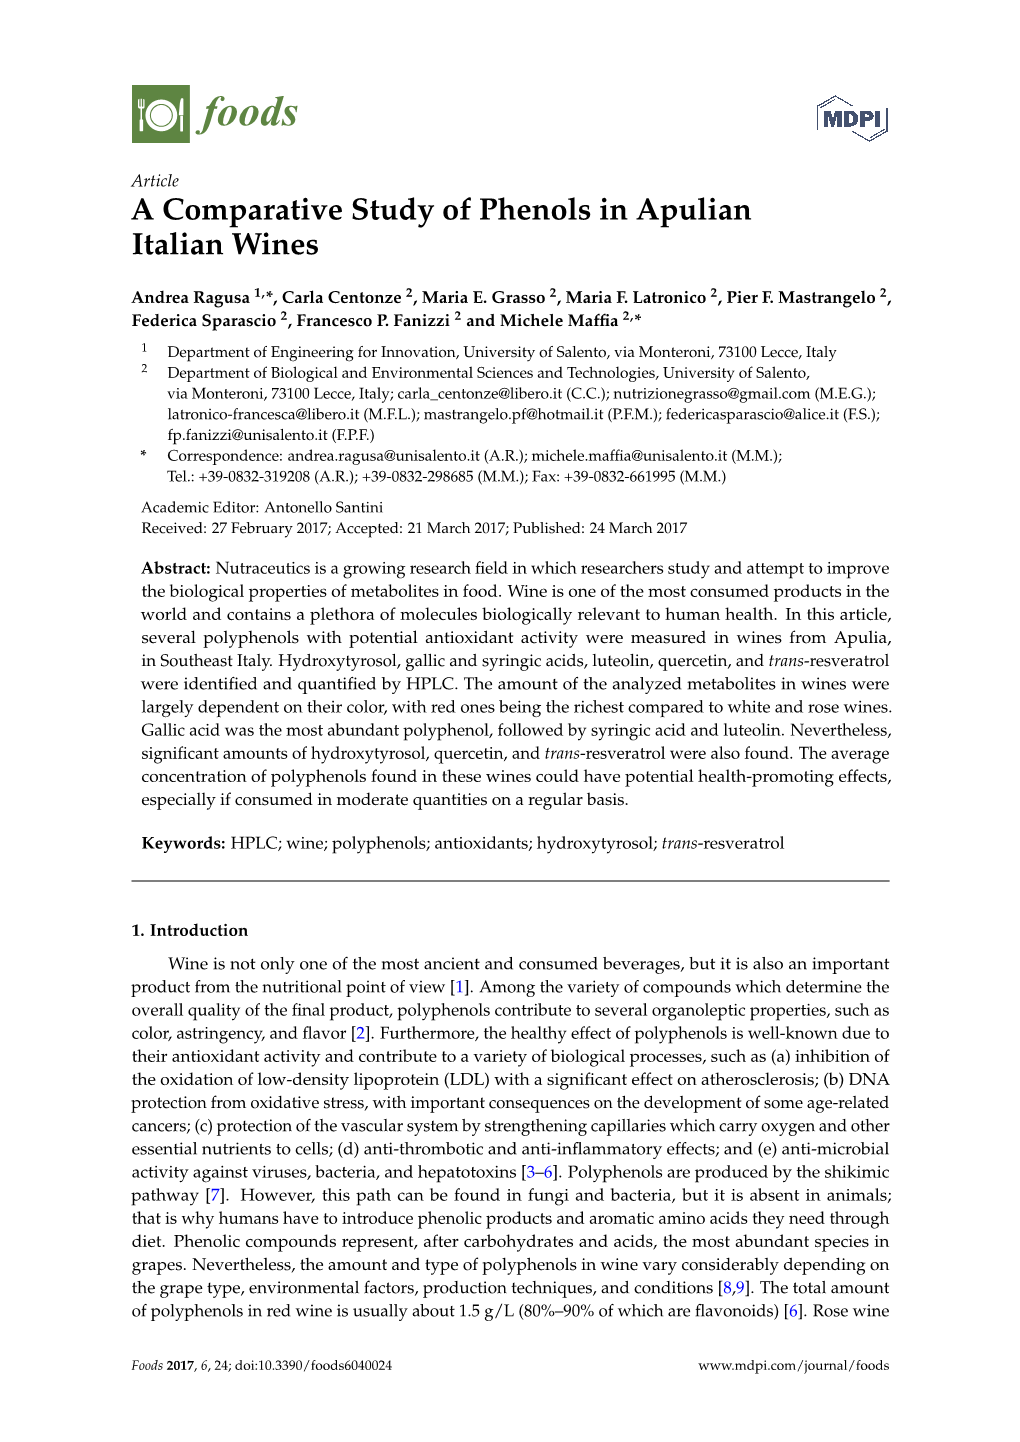 A Comparative Study of Phenols in Apulian Italian Wines